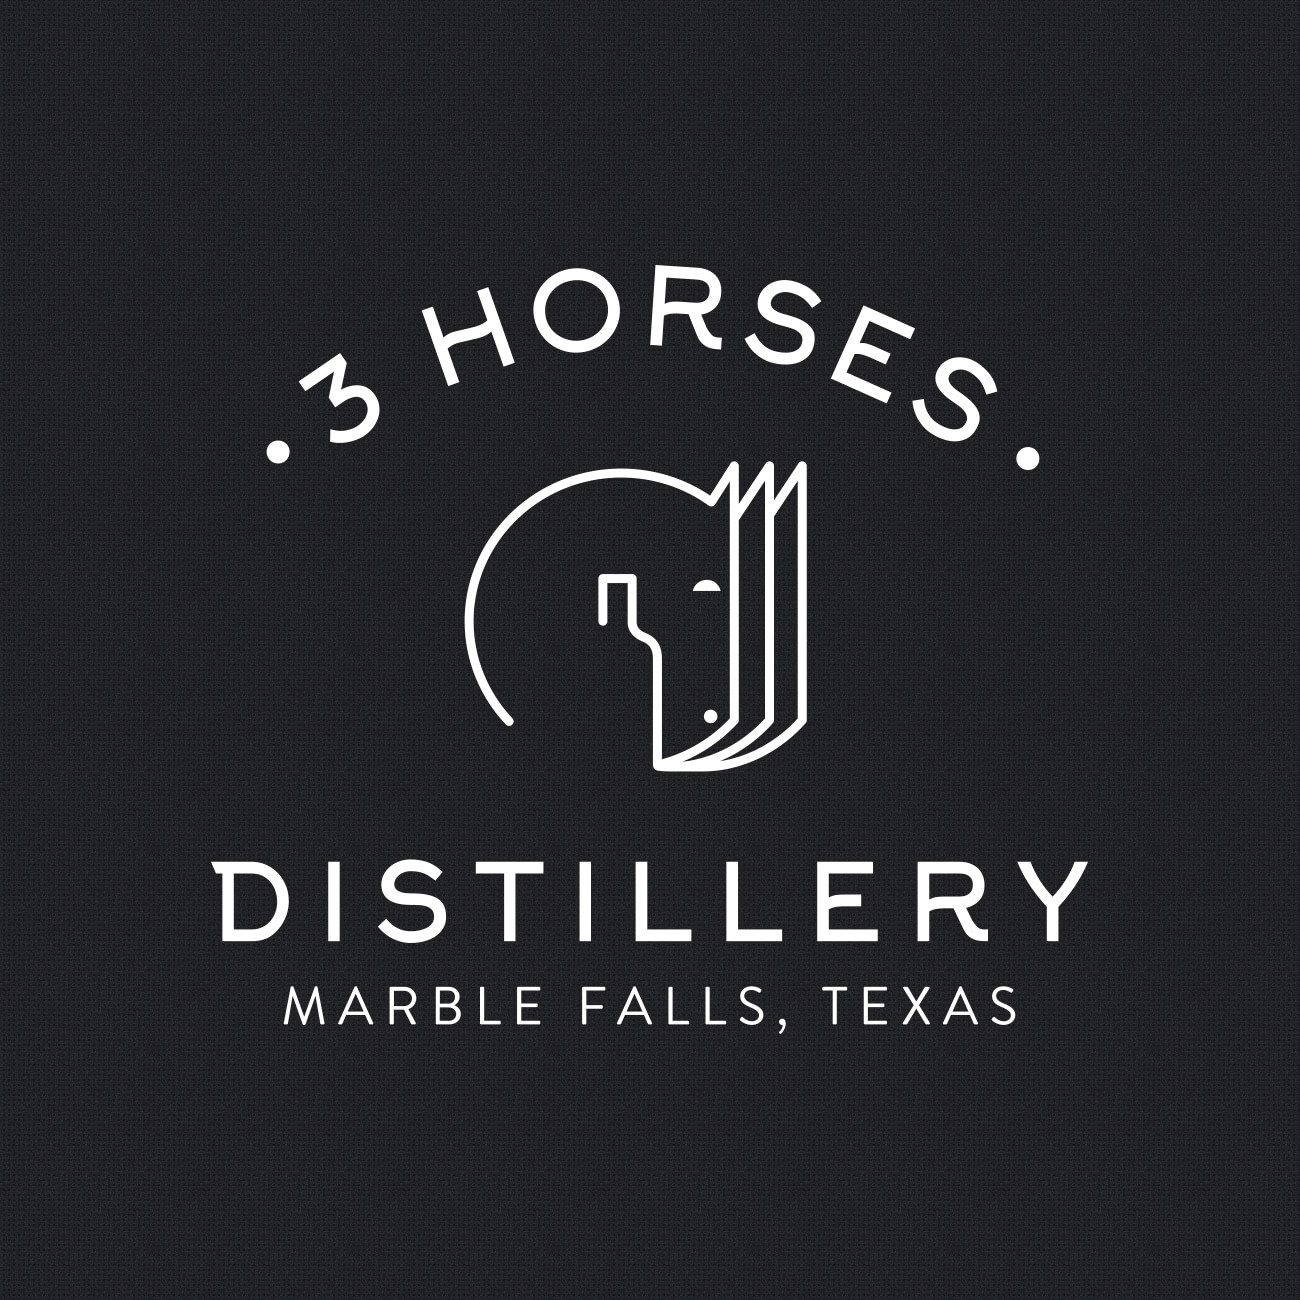 3 Horses Distillery